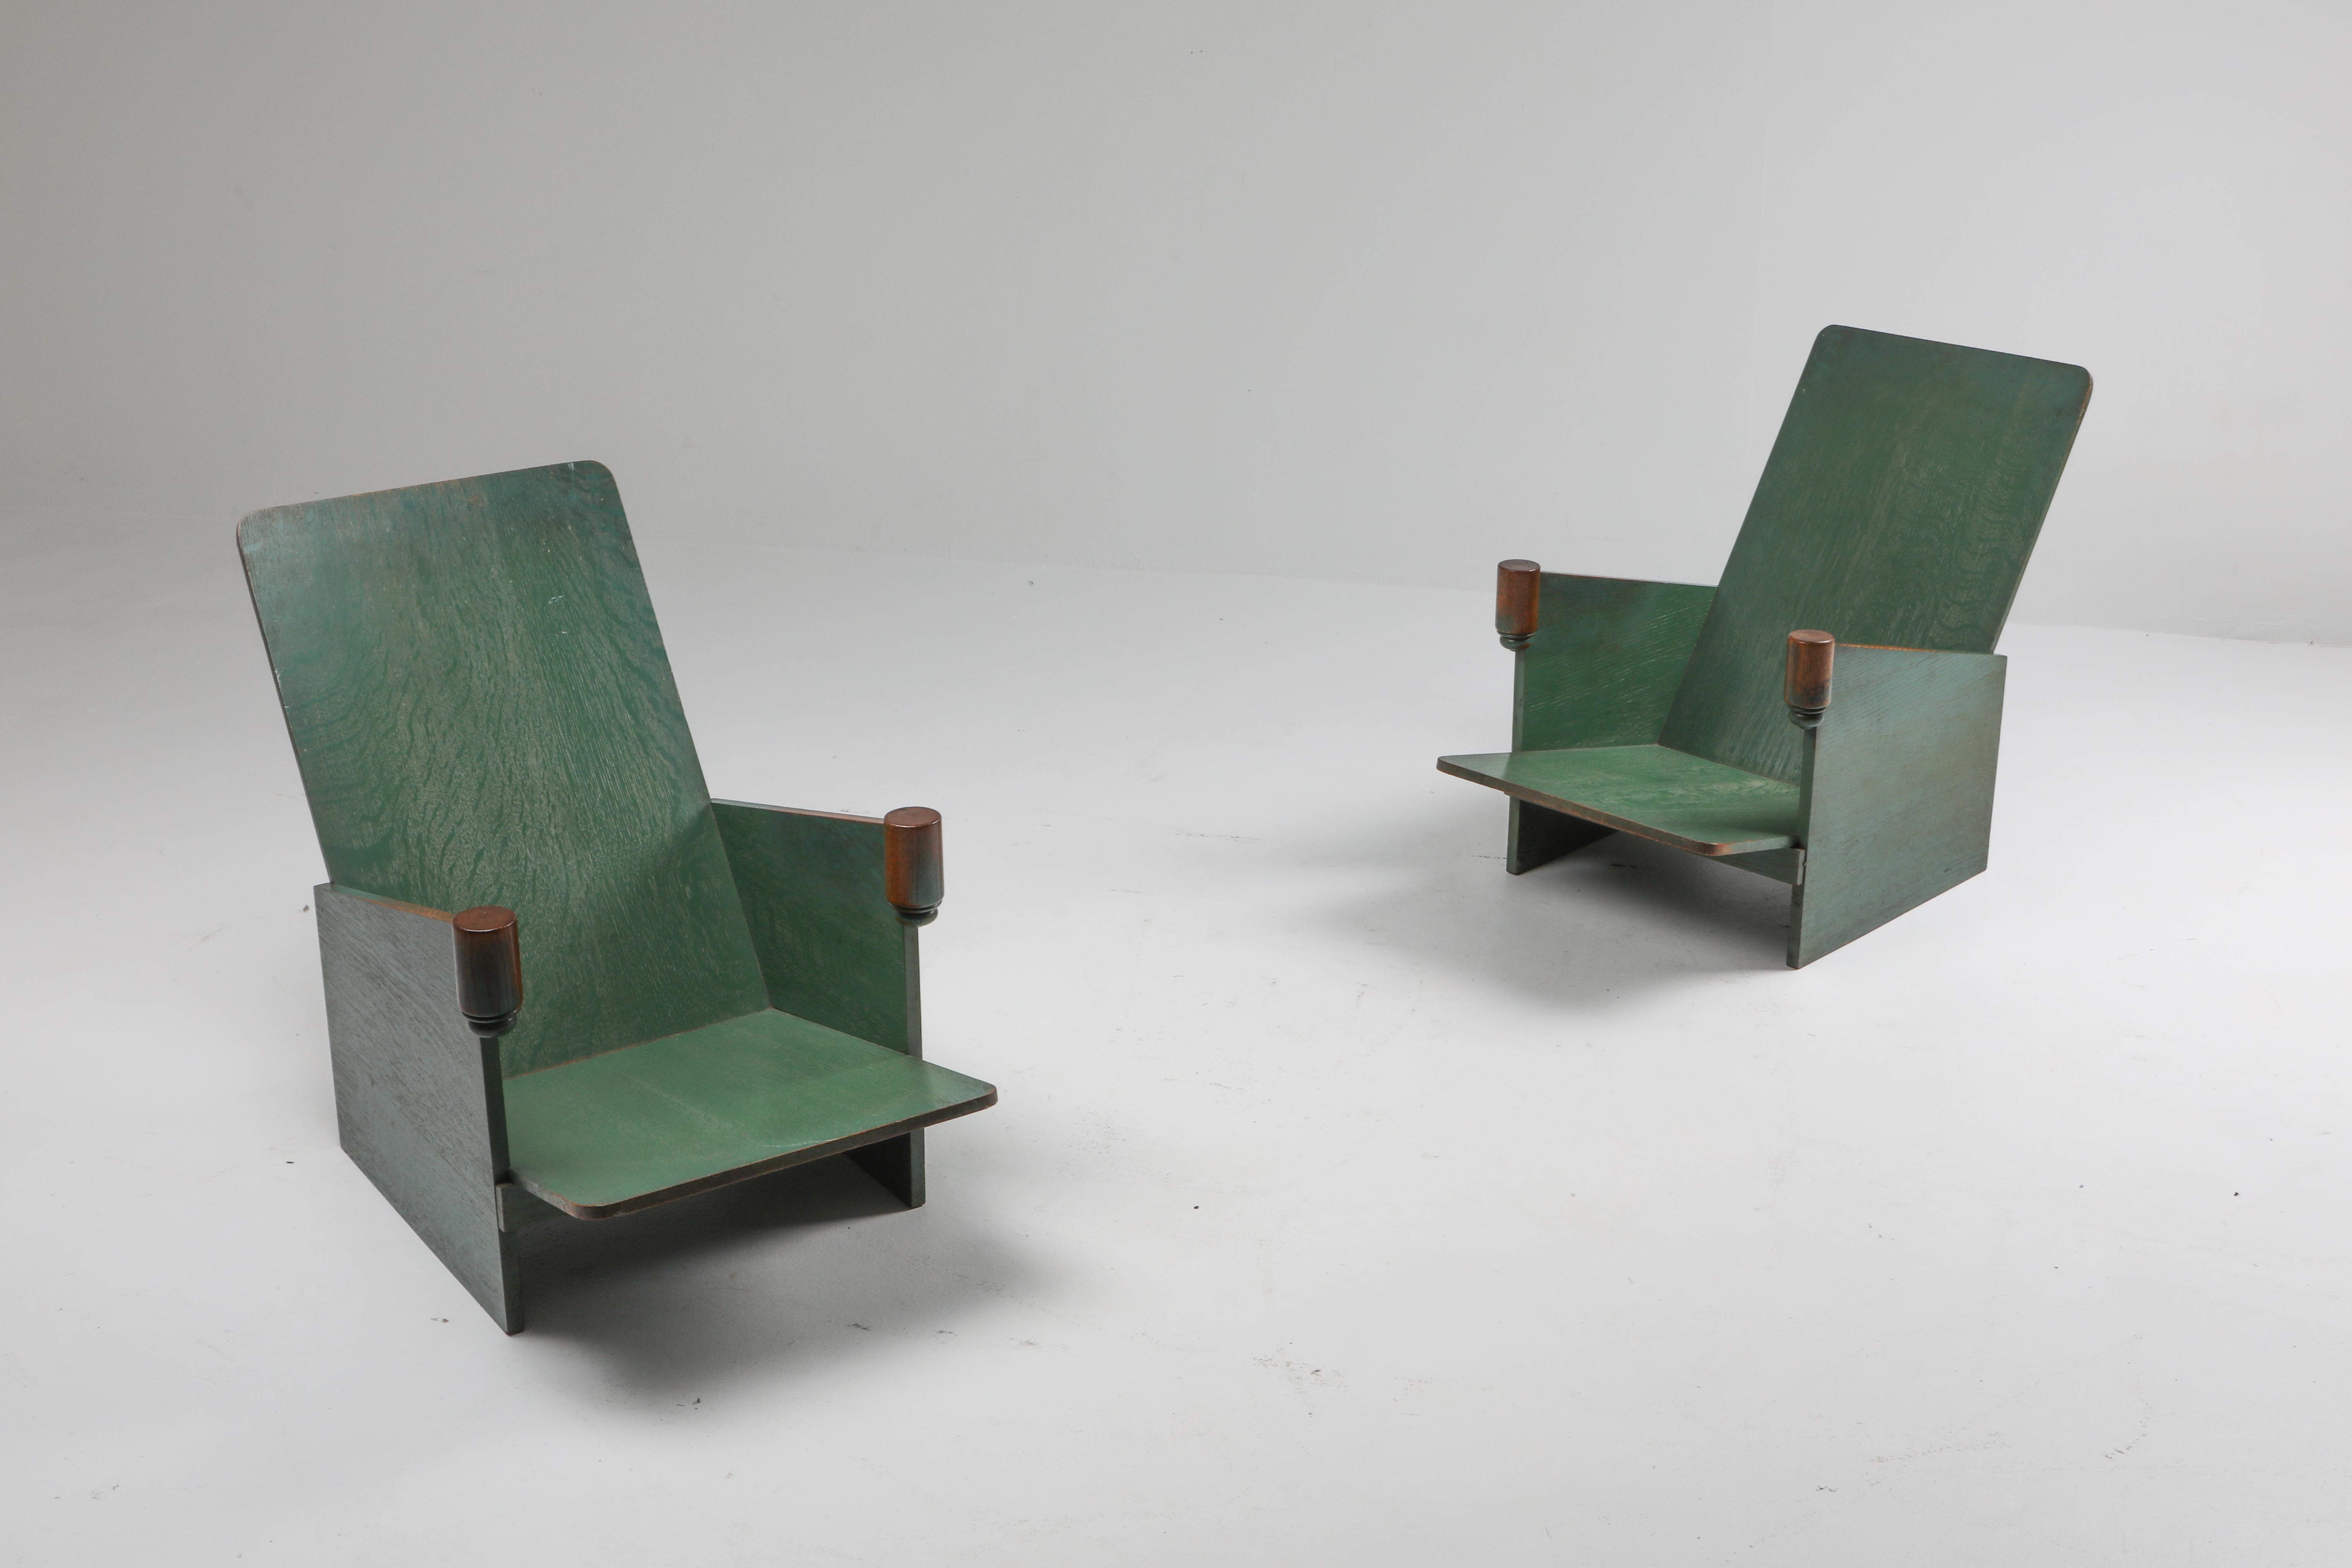 Art Deco Constructivist Pair of Green Lounge Chairs, Belgium, 1920s